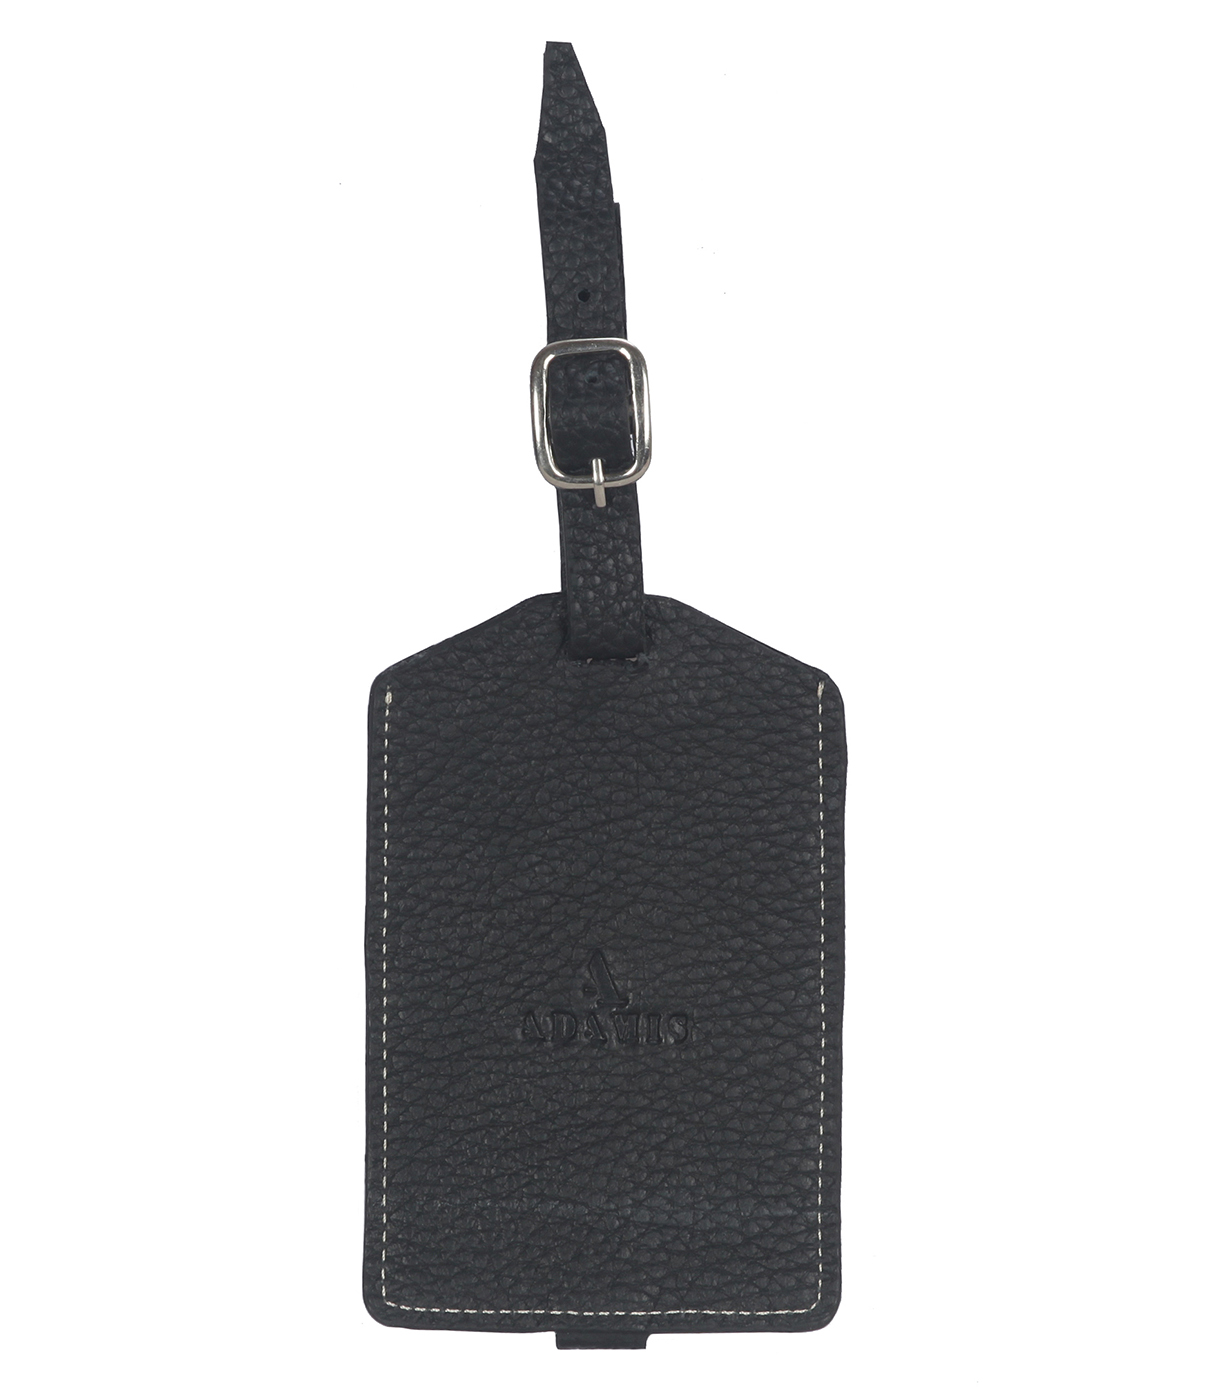  Leather Travel Essential(Black)W283